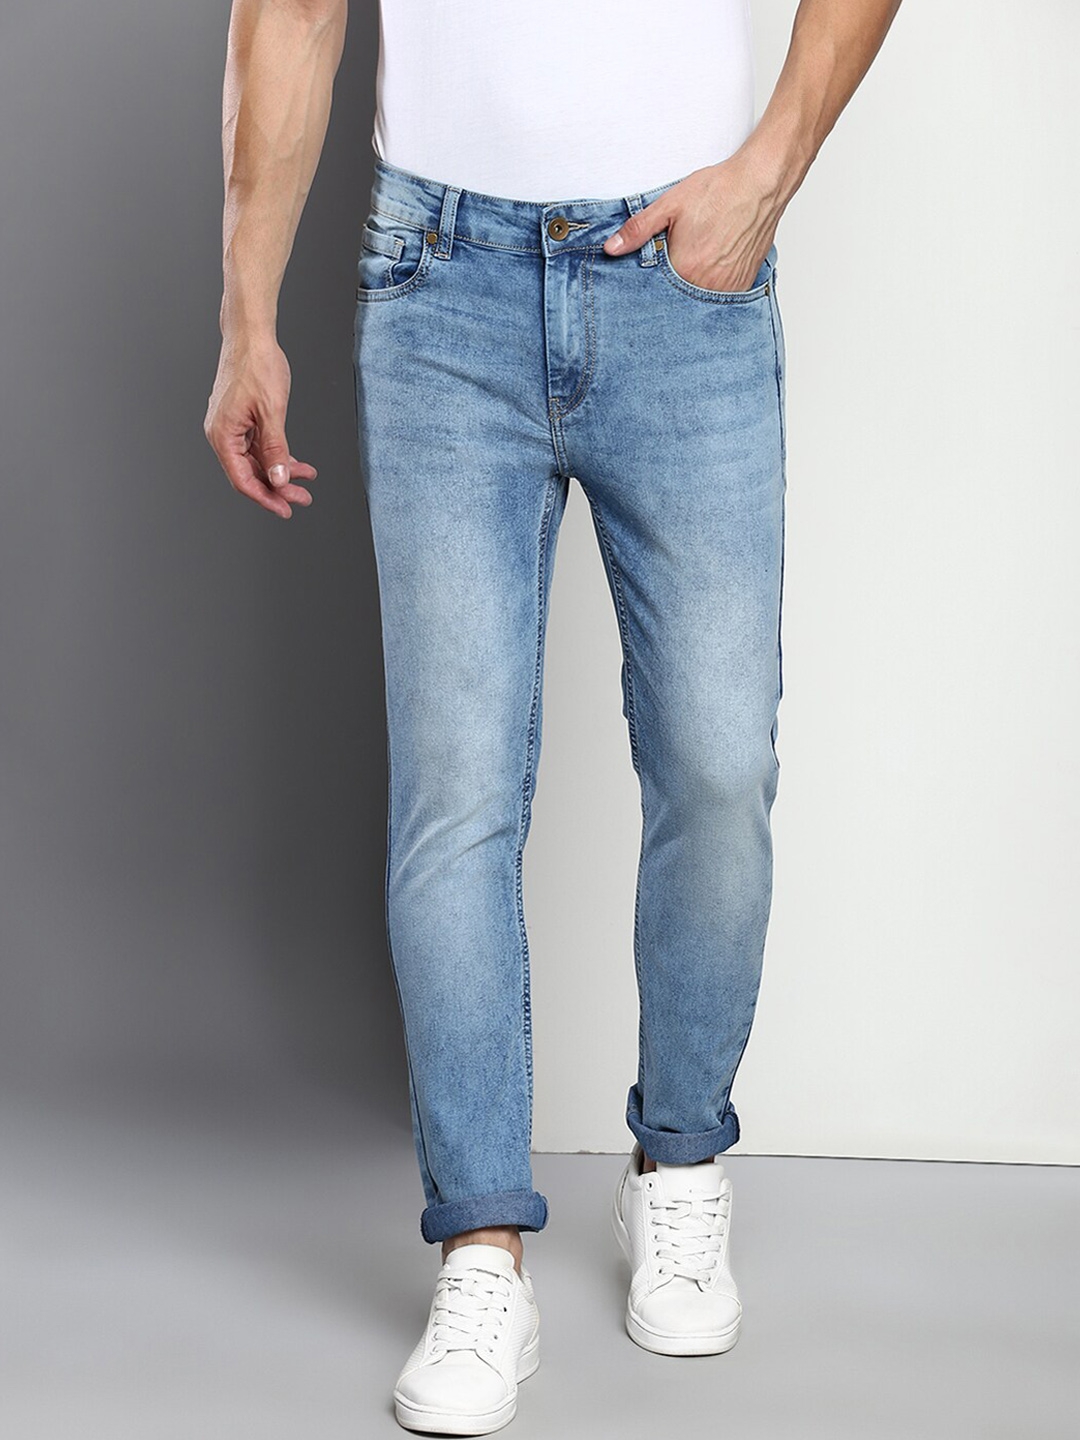 Denim Jeans for Men - Best Jeans, Jean Jackets and Trends-nextbuild.com.vn